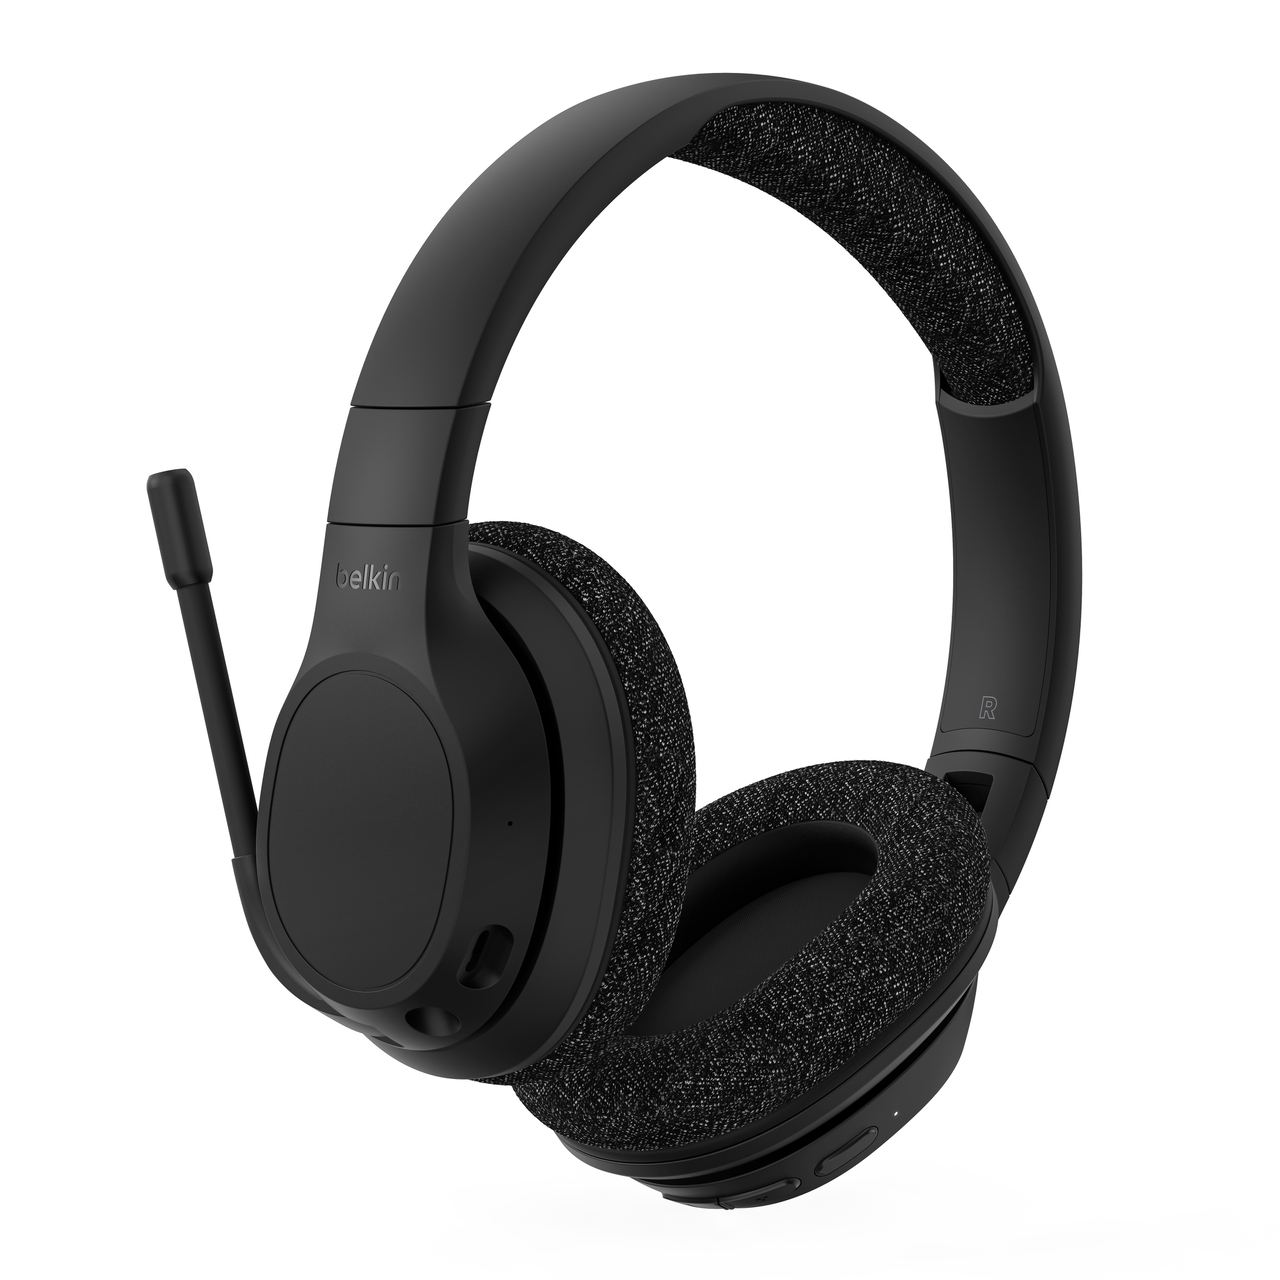 Custom Skin ATH-M50X. Let me know your feedback. : r/headphones